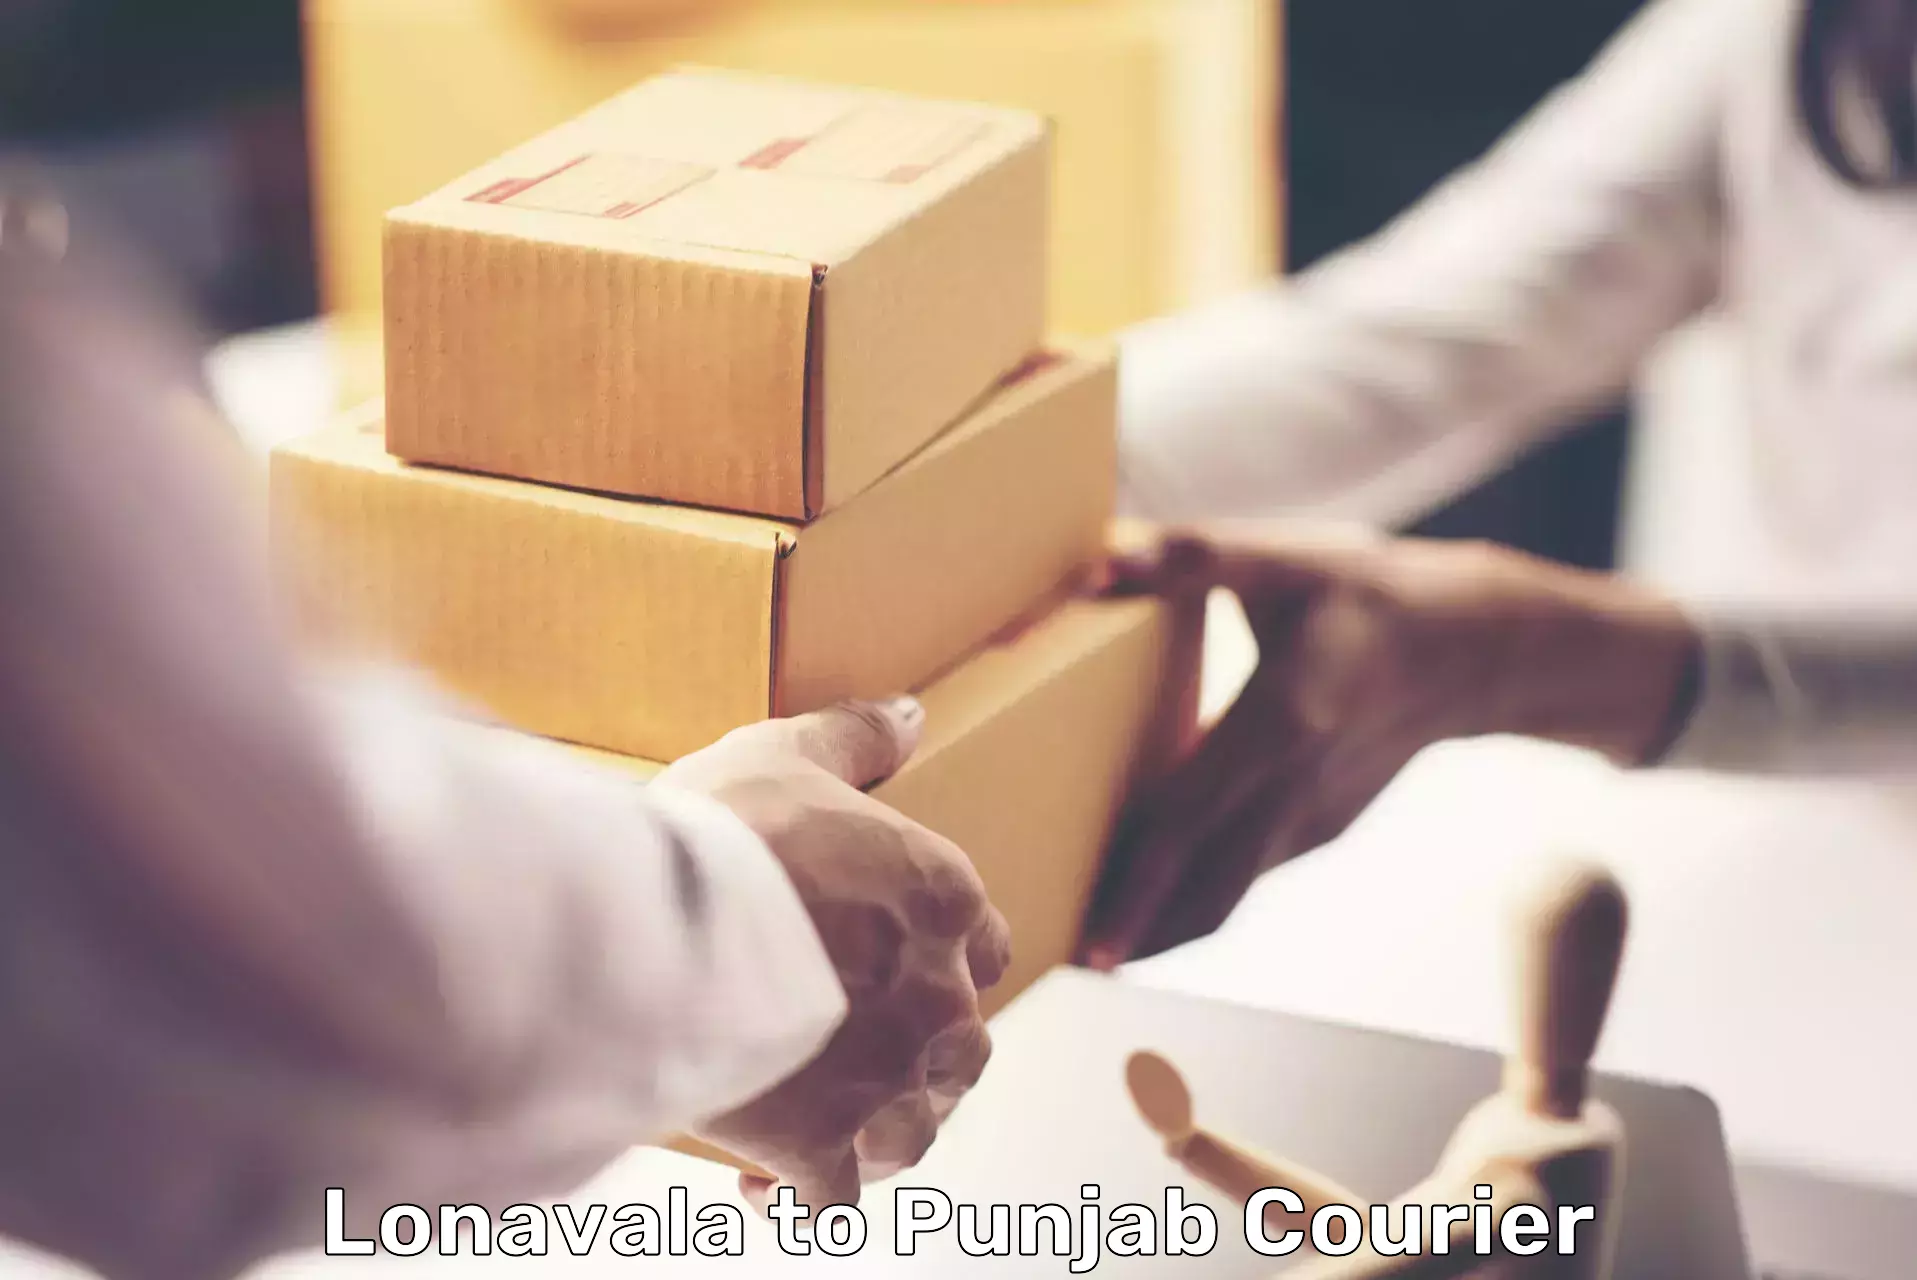 Delivery service partnership Lonavala to Barnala